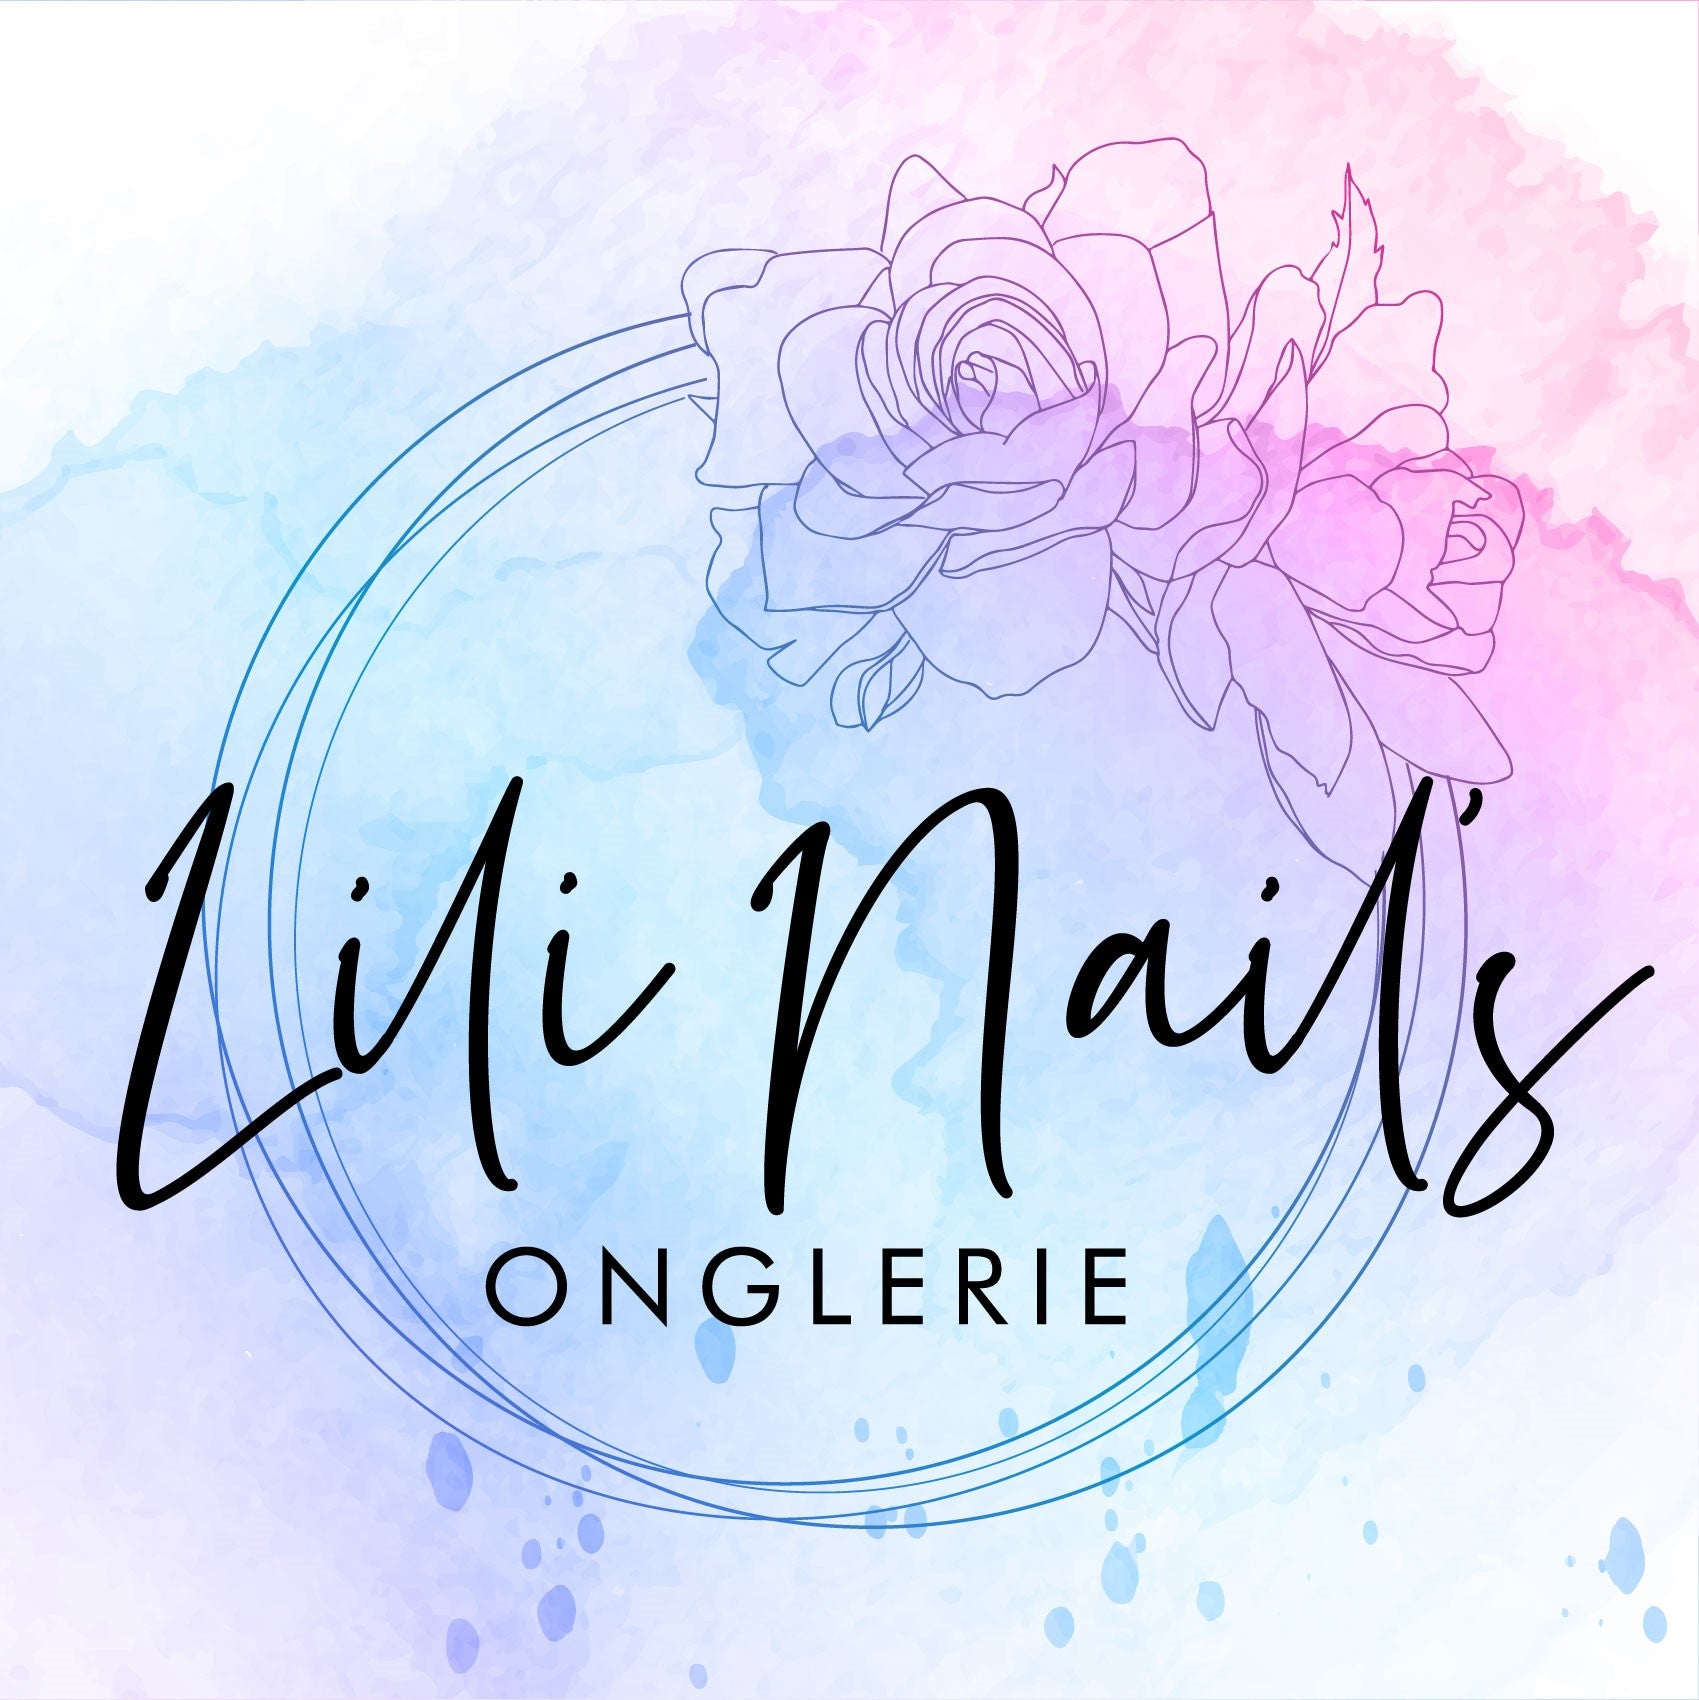 Lili Nail's Onglerie